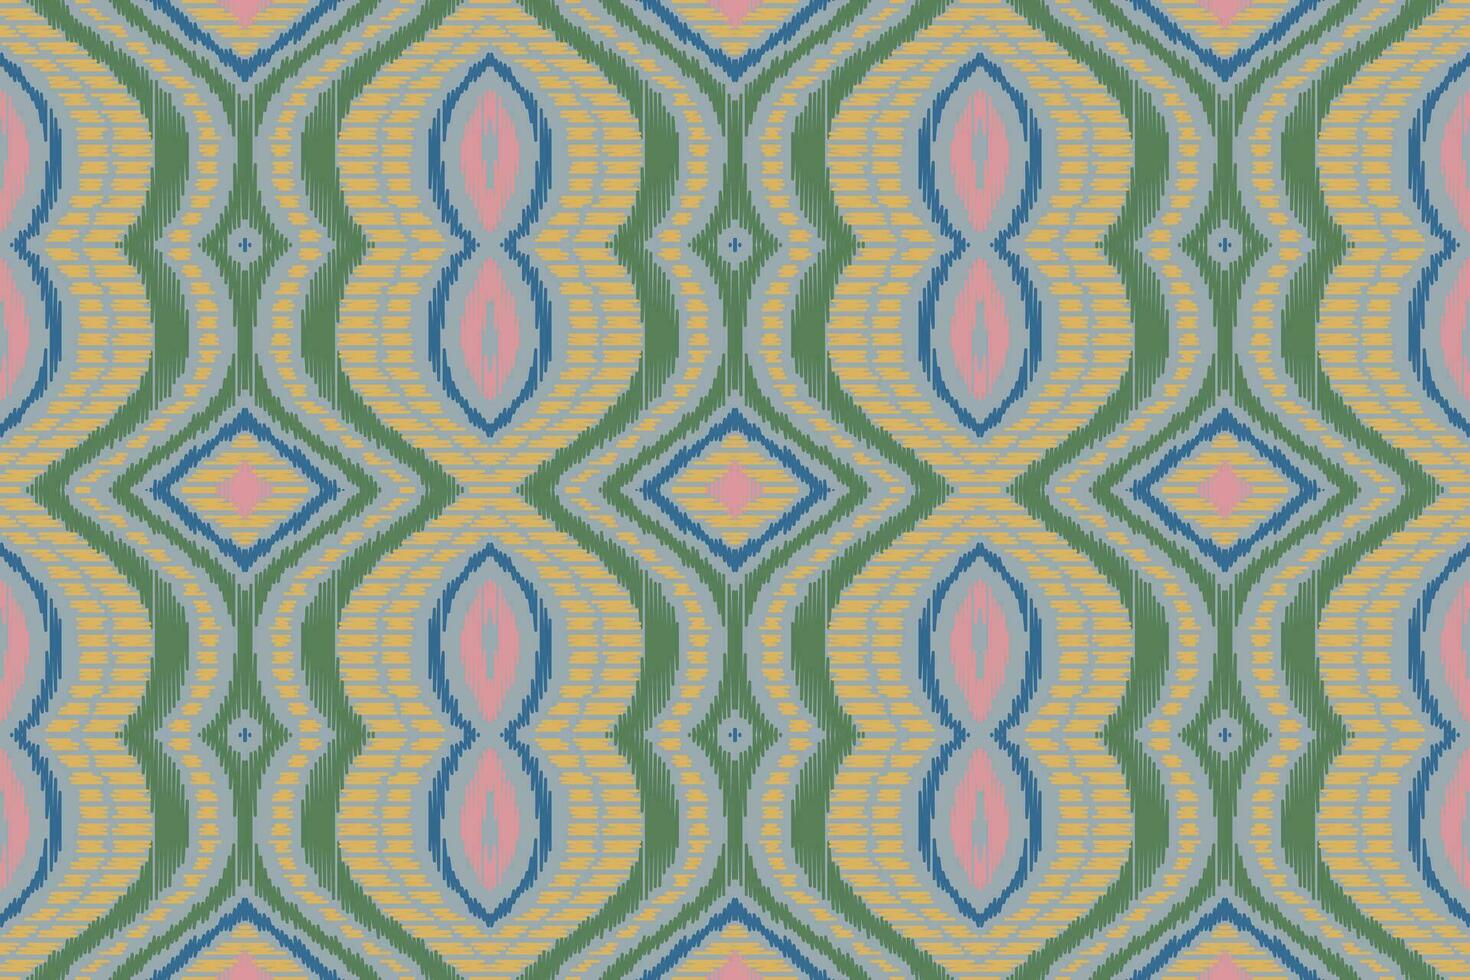 motivo ikat cachemir bordado antecedentes. ikat cheurón geométrico étnico oriental modelo tradicional. ikat azteca estilo resumen diseño para impresión textura,tela,sari,sari,alfombra. vector